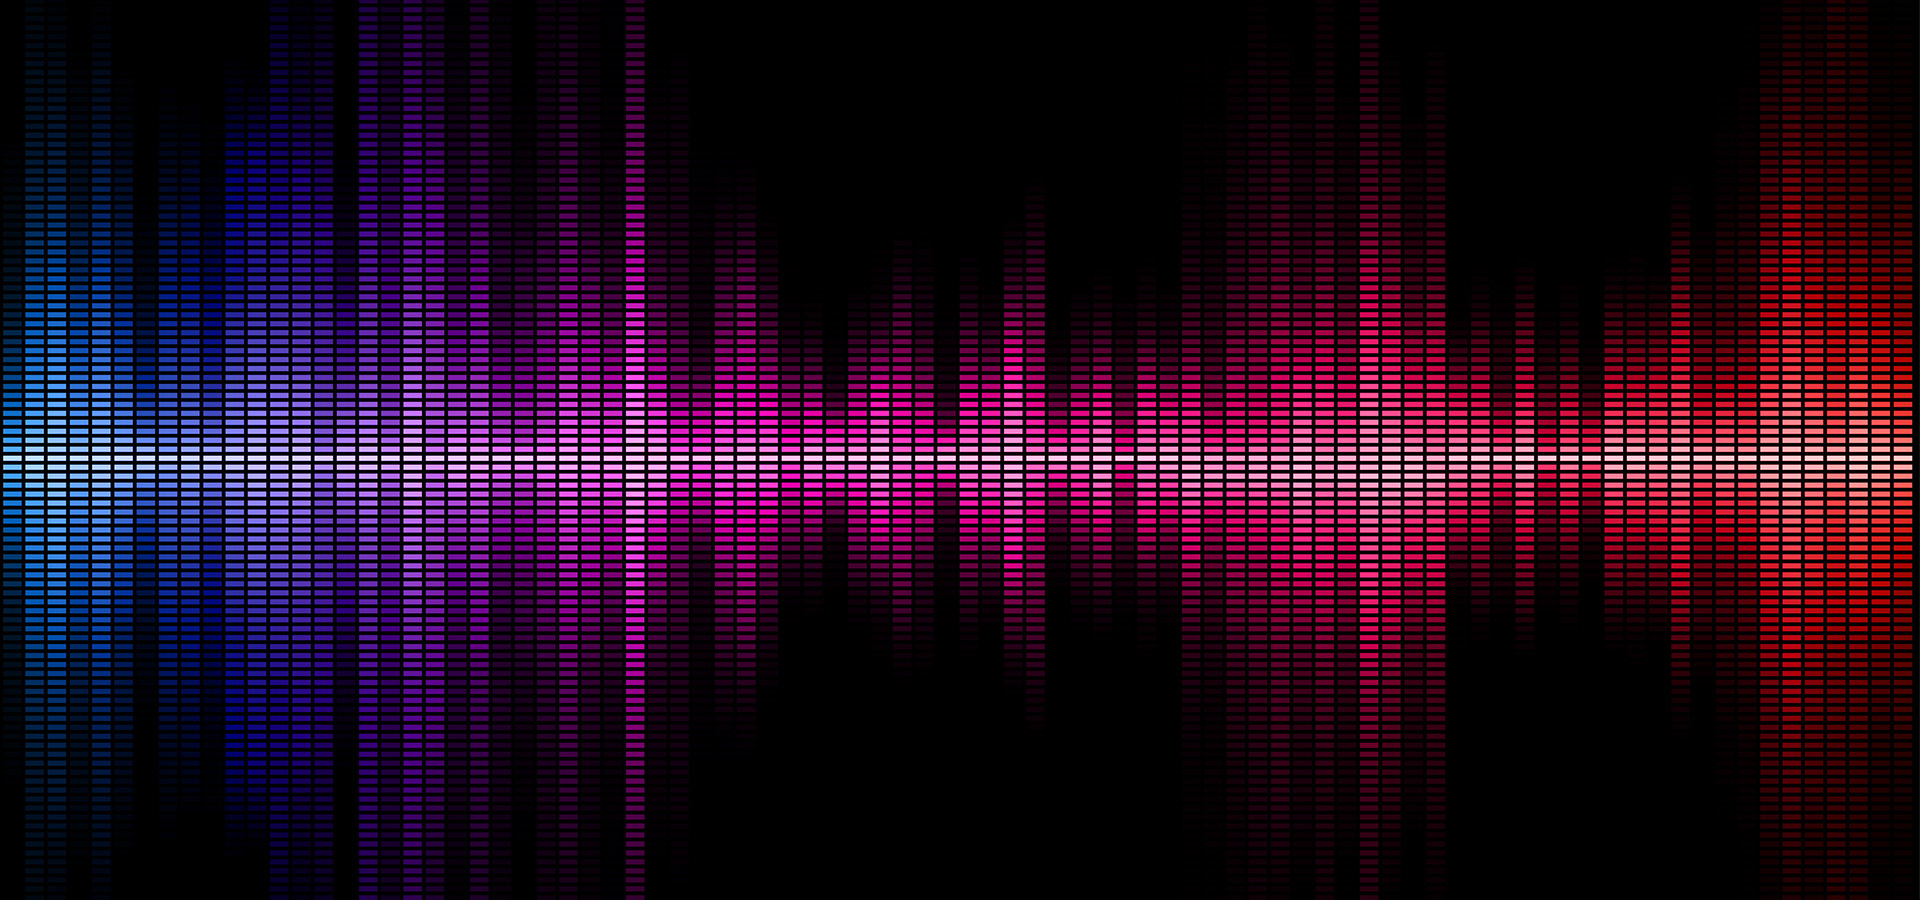 Music sound waves